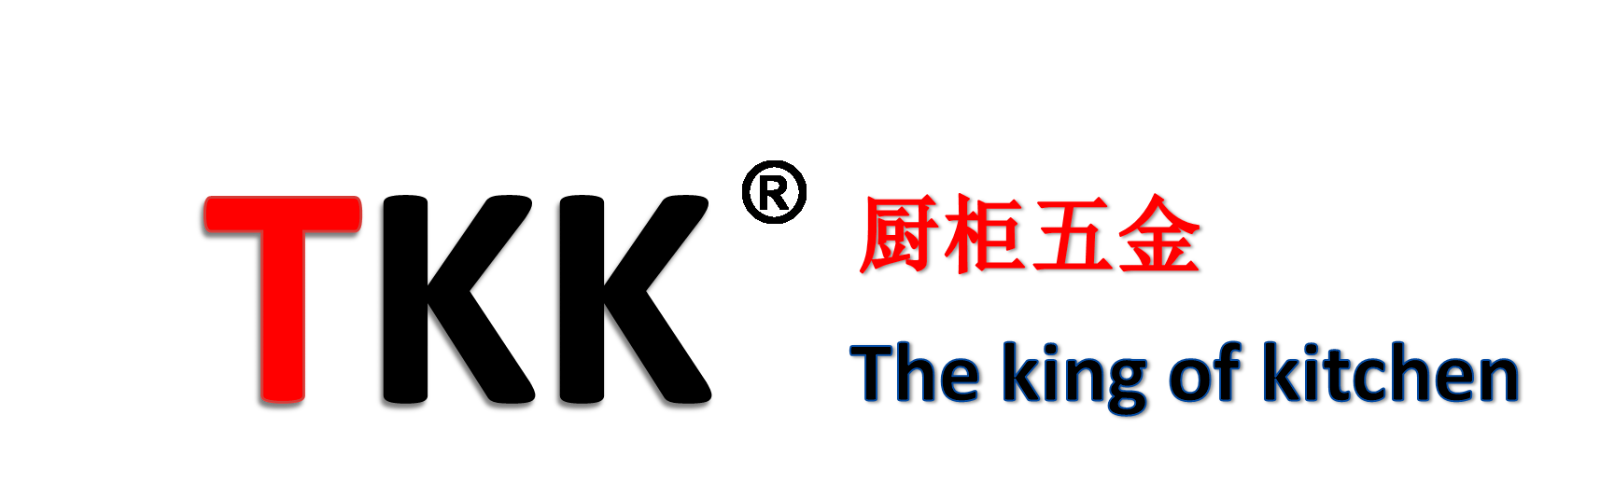 TKK Meijiayi Hardware Company Limited